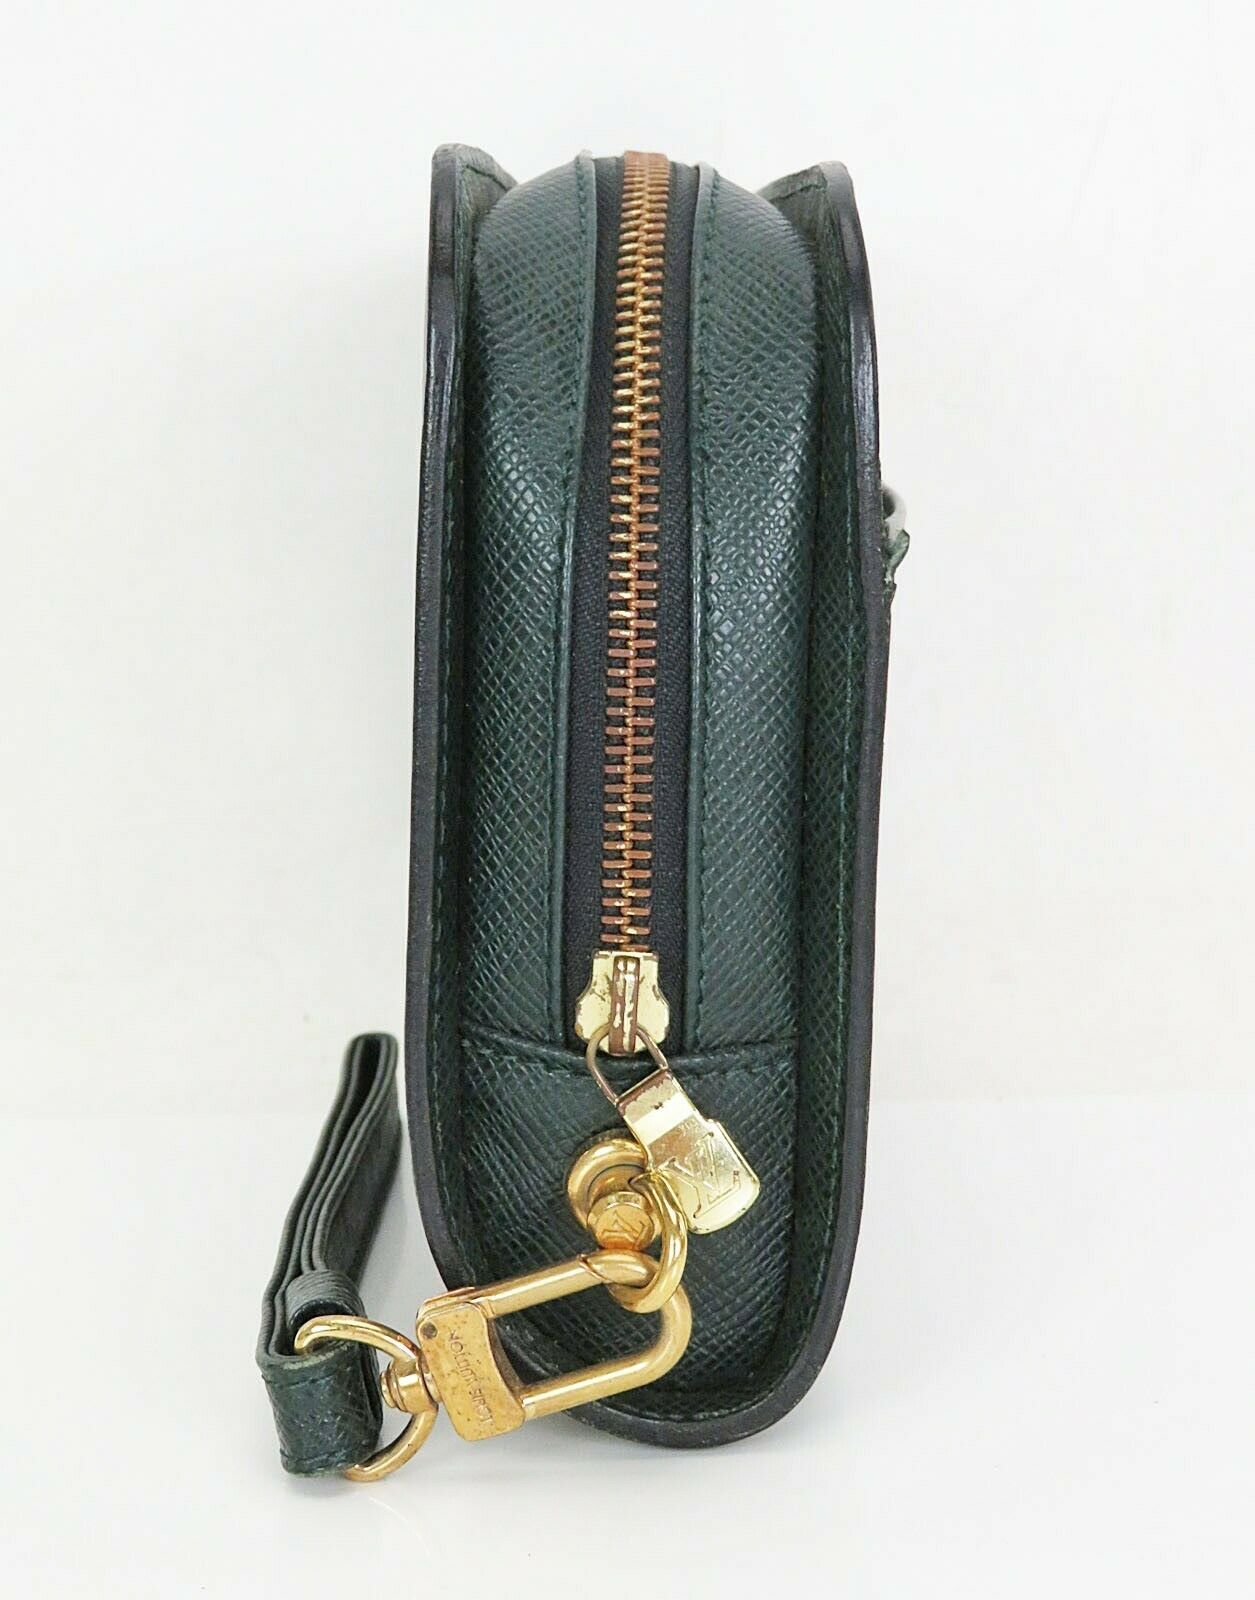 Authentic LOUIS VUITTON Baikal Green Taiga Leather Clutch Hand Wrist Bag #34915 - Bags